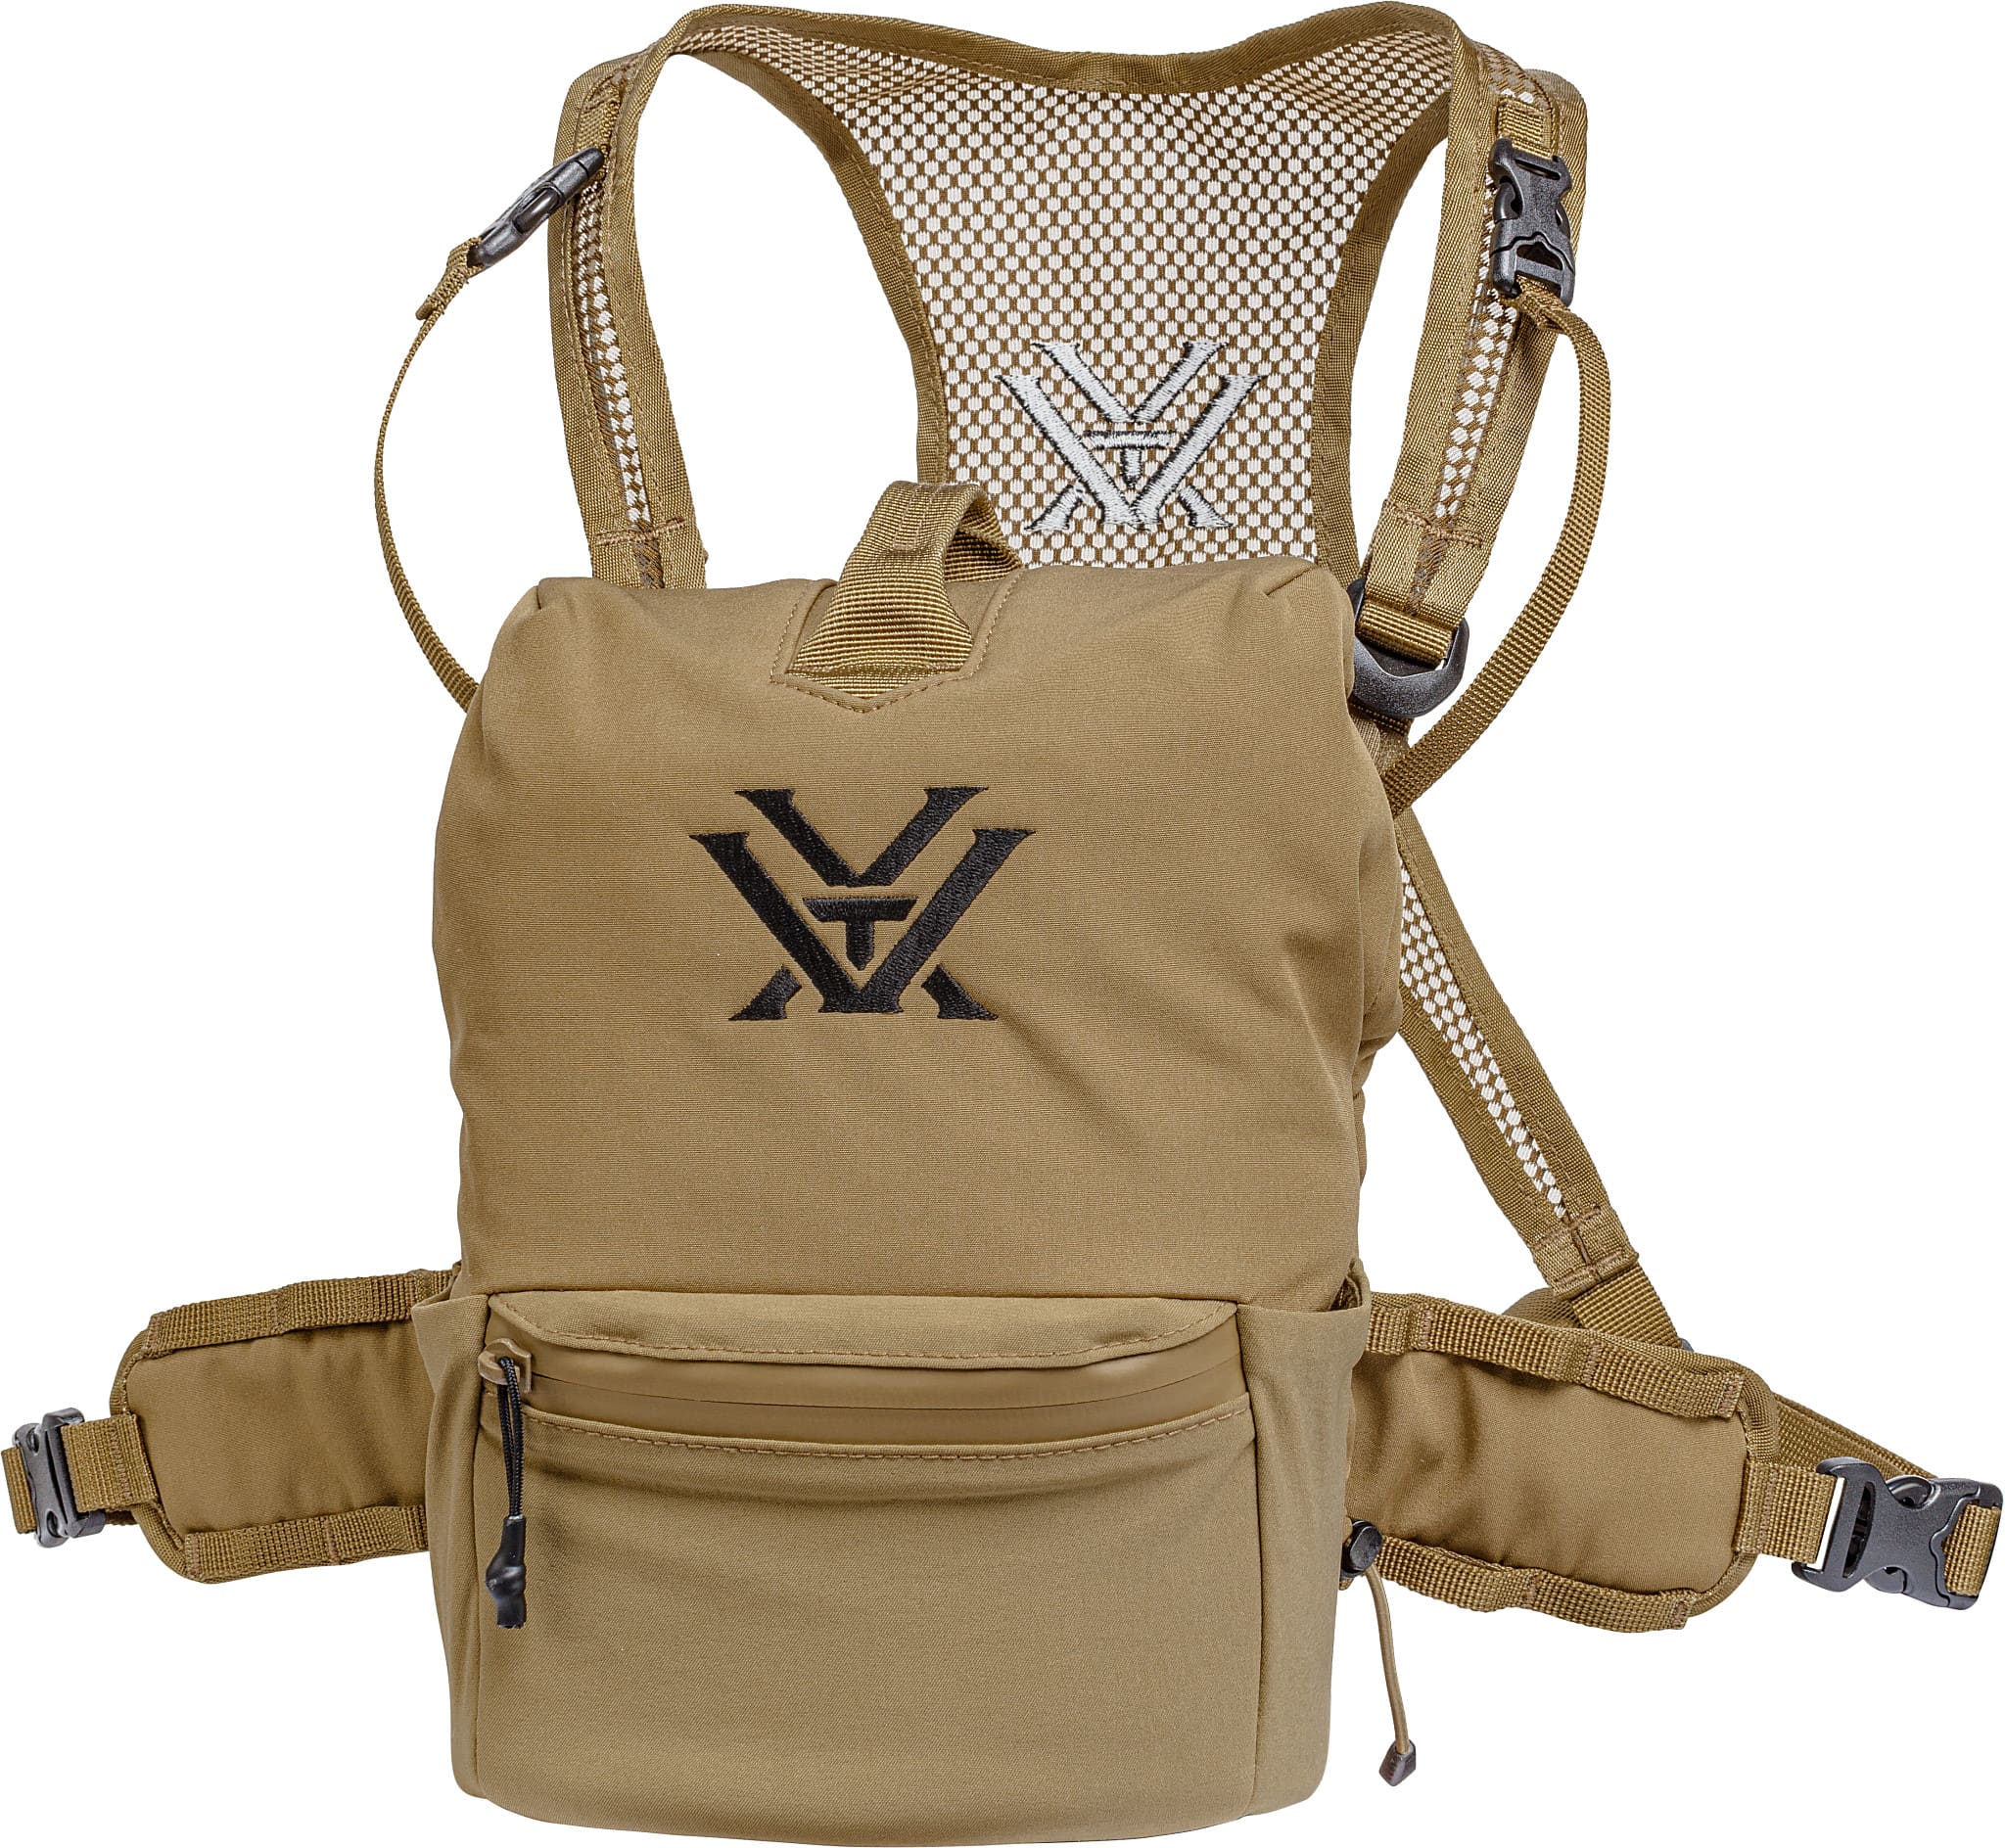 Vortex® GlassPak Pro Harness - Large